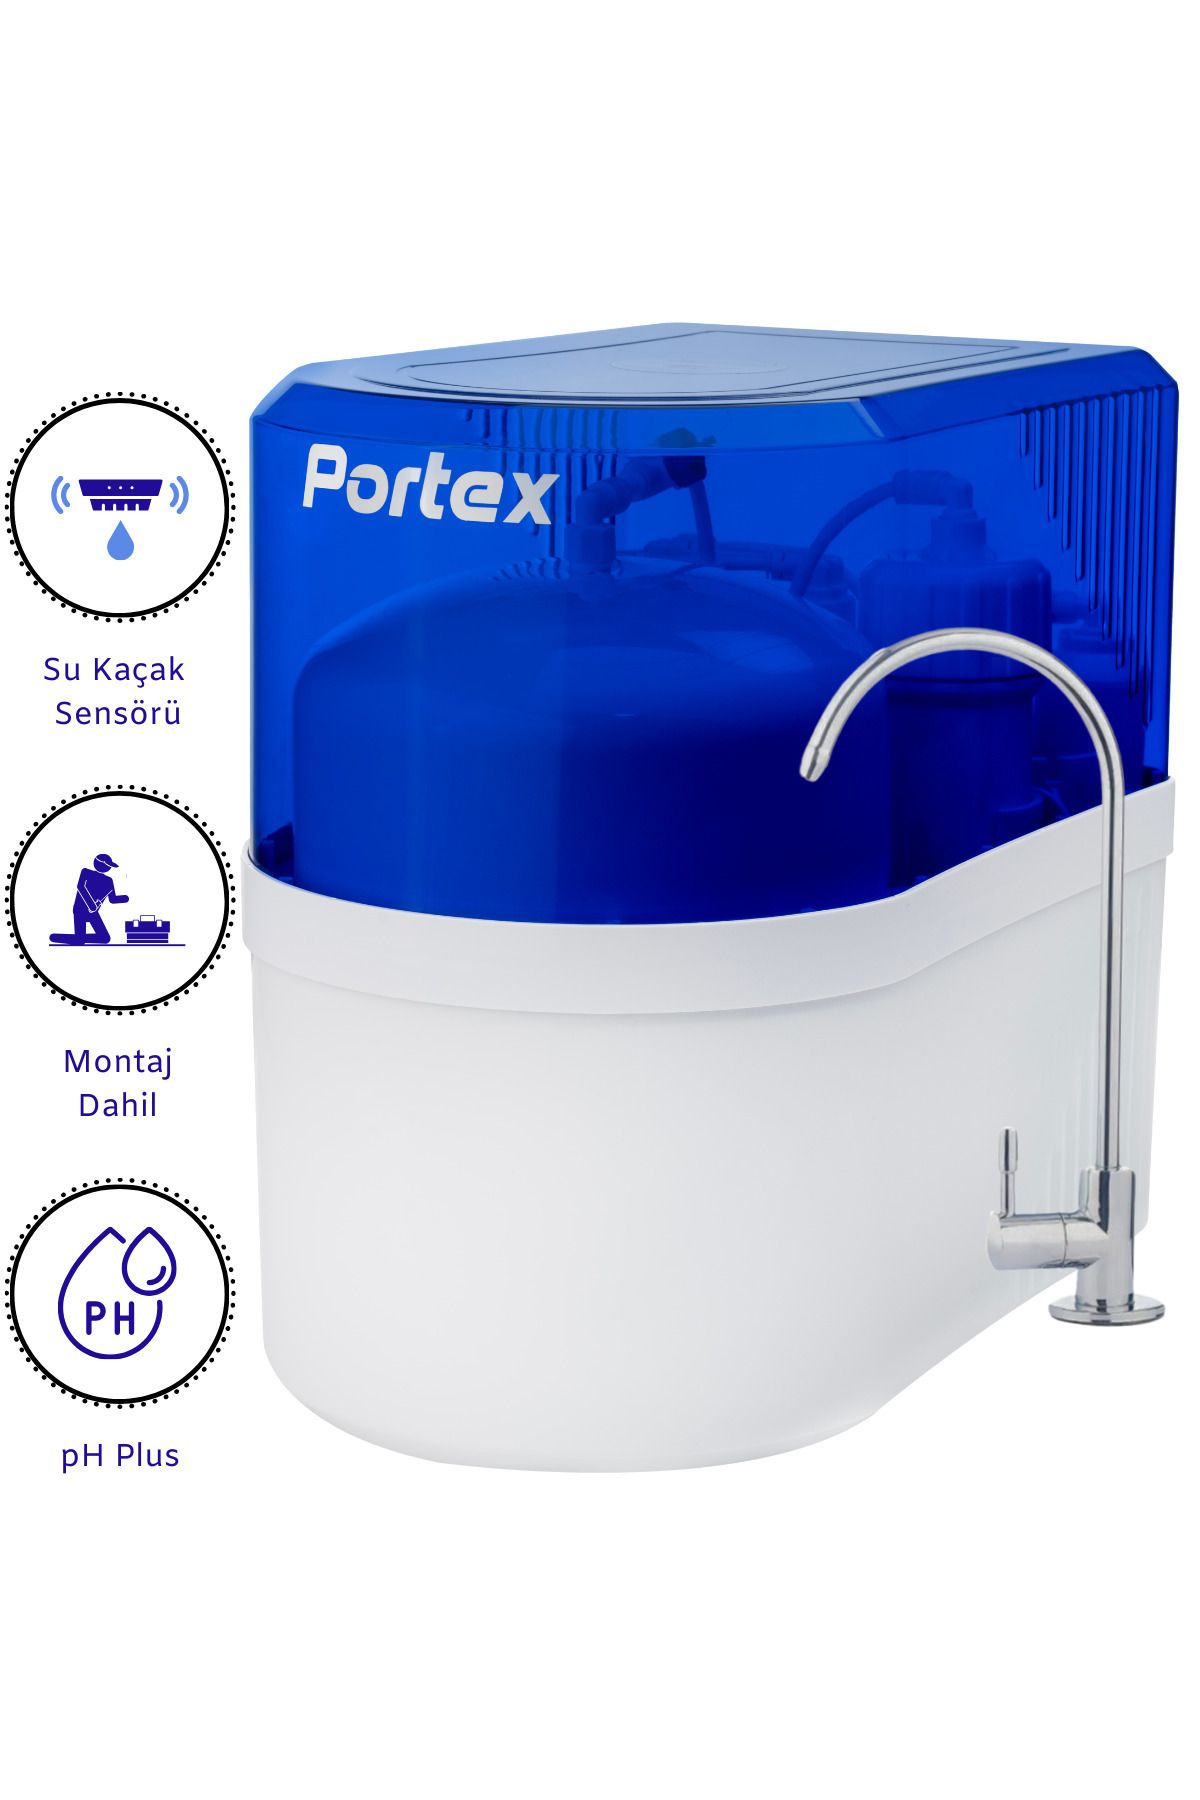 Portex 15 Aşamalı Ücretsiz Montaj Su Kaçak Sensörlü Nsf Onaylı Çelik Su Tanklı Premium Su Arıtma Cihazı